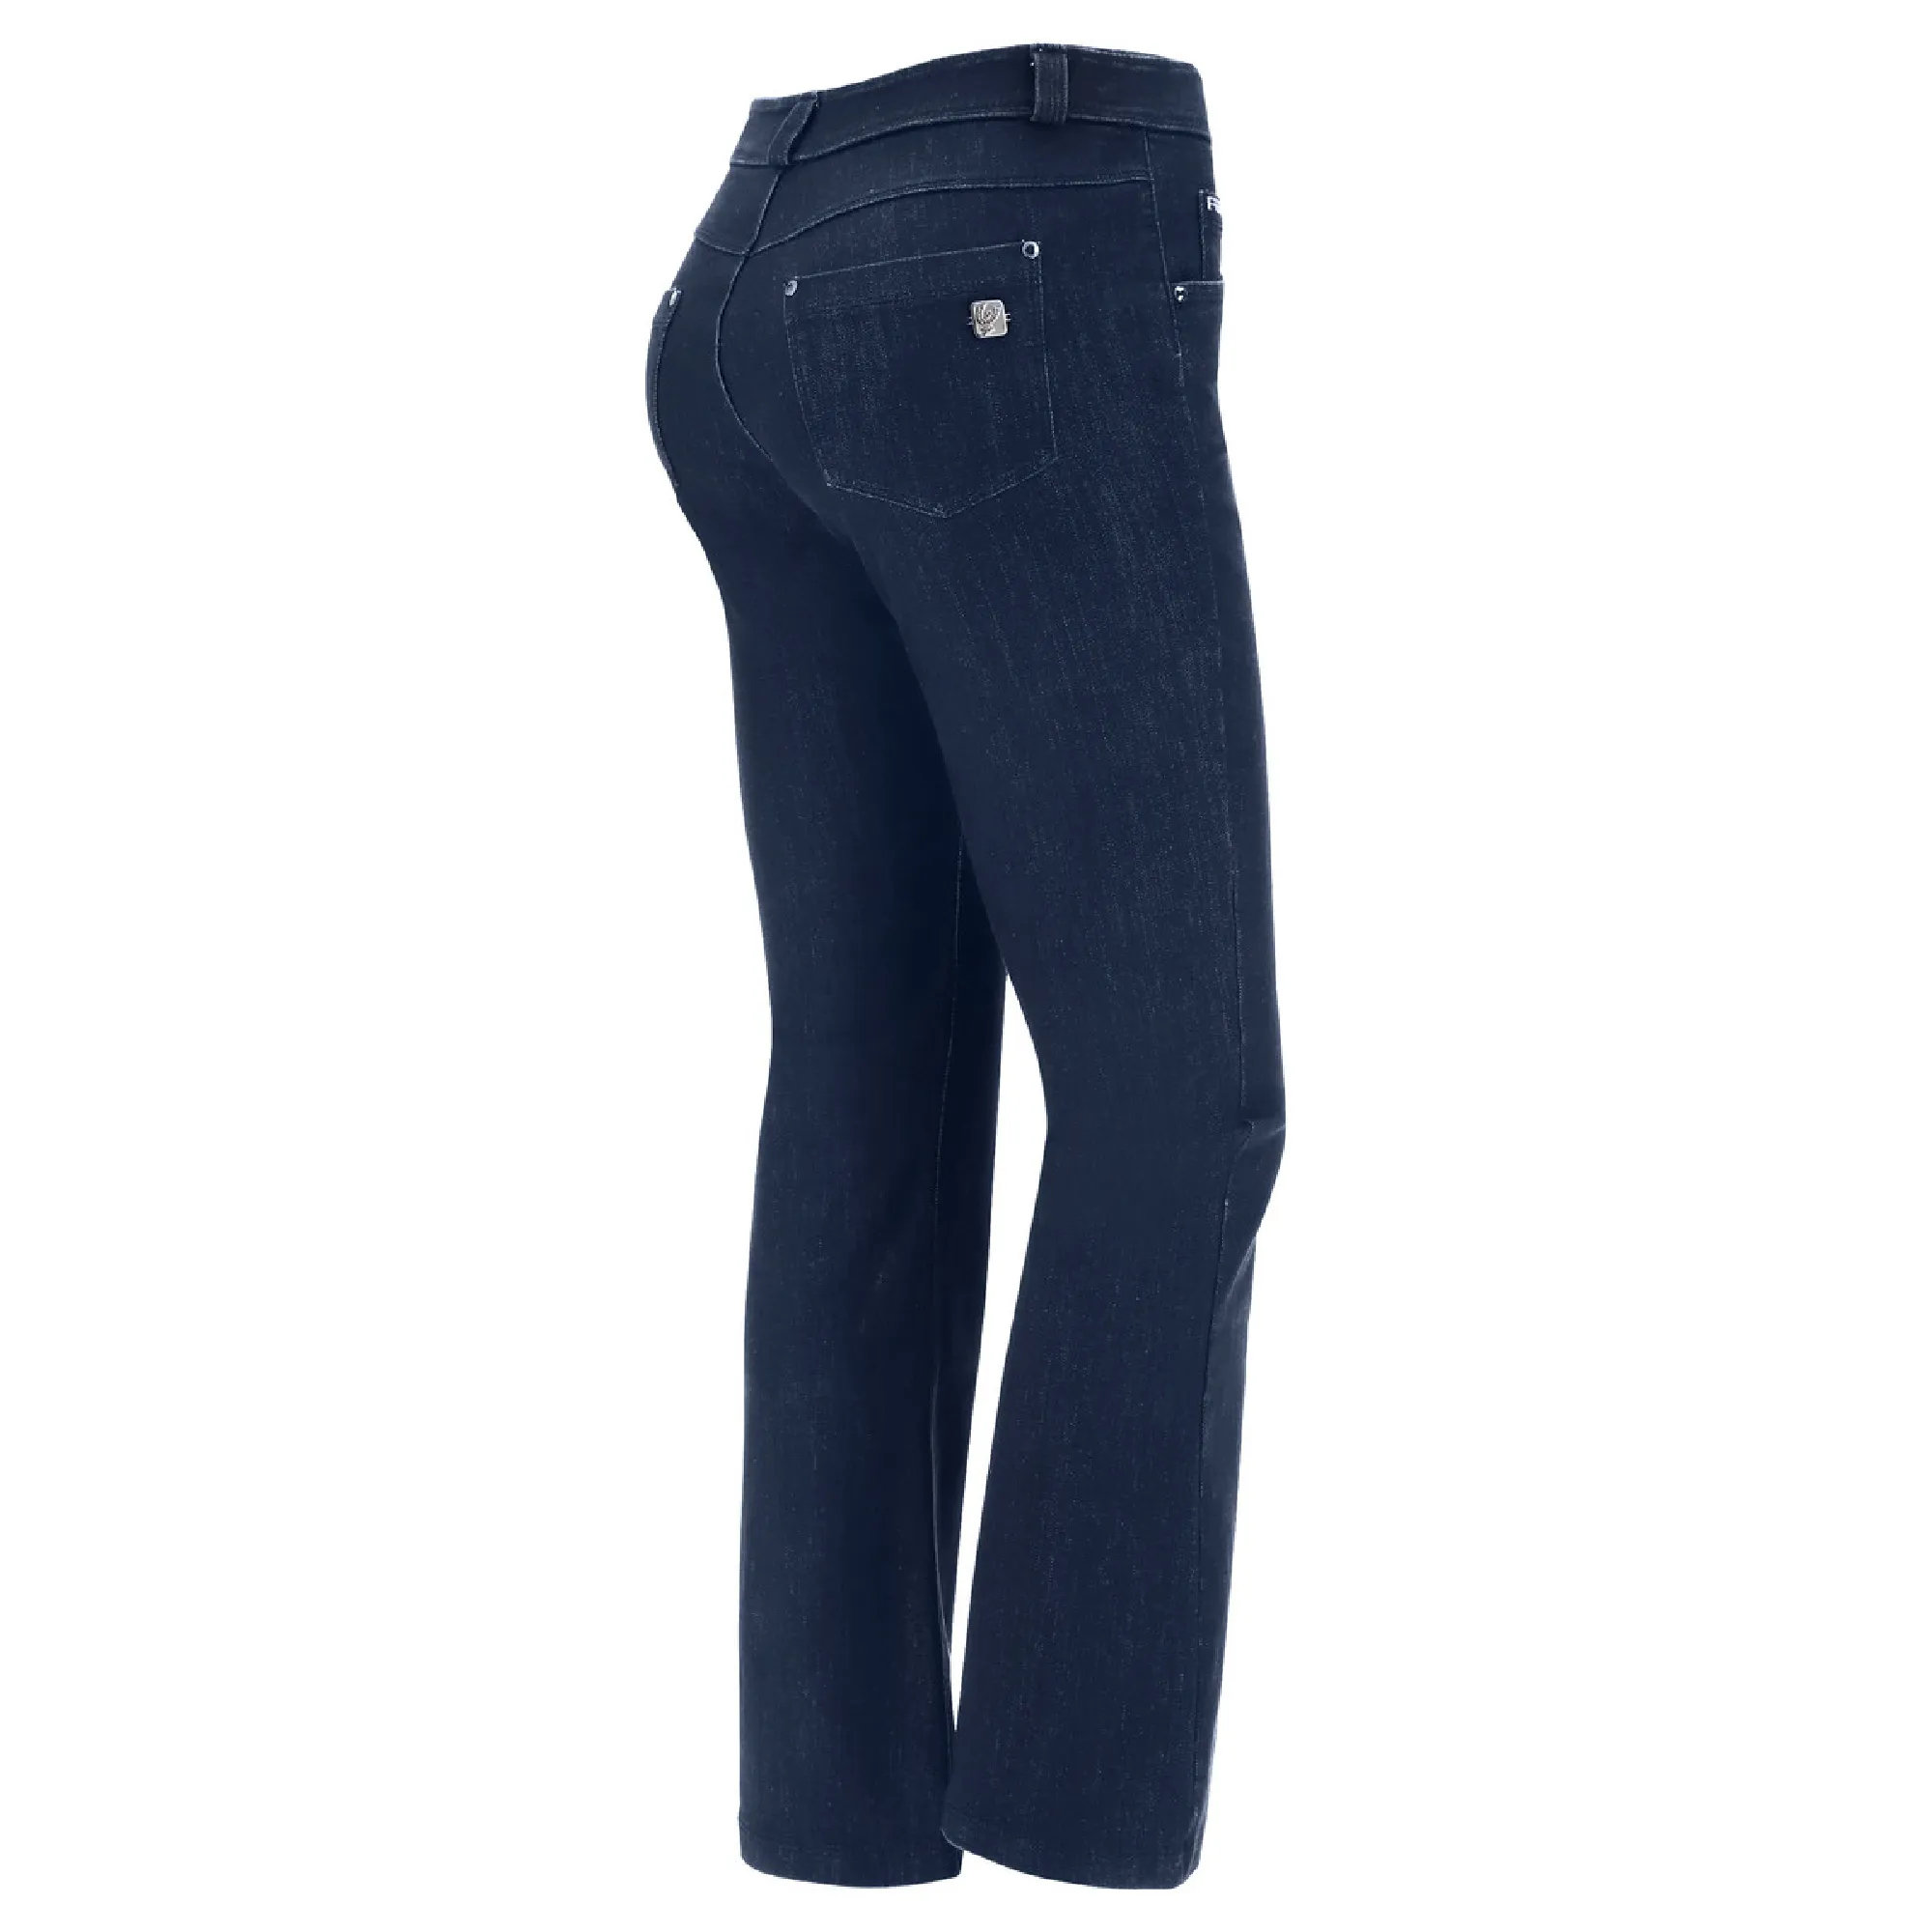 Freddy Fit Jeans - Regular Waist Flare - Cropped - Dark Denim – Blue Seam - J0B